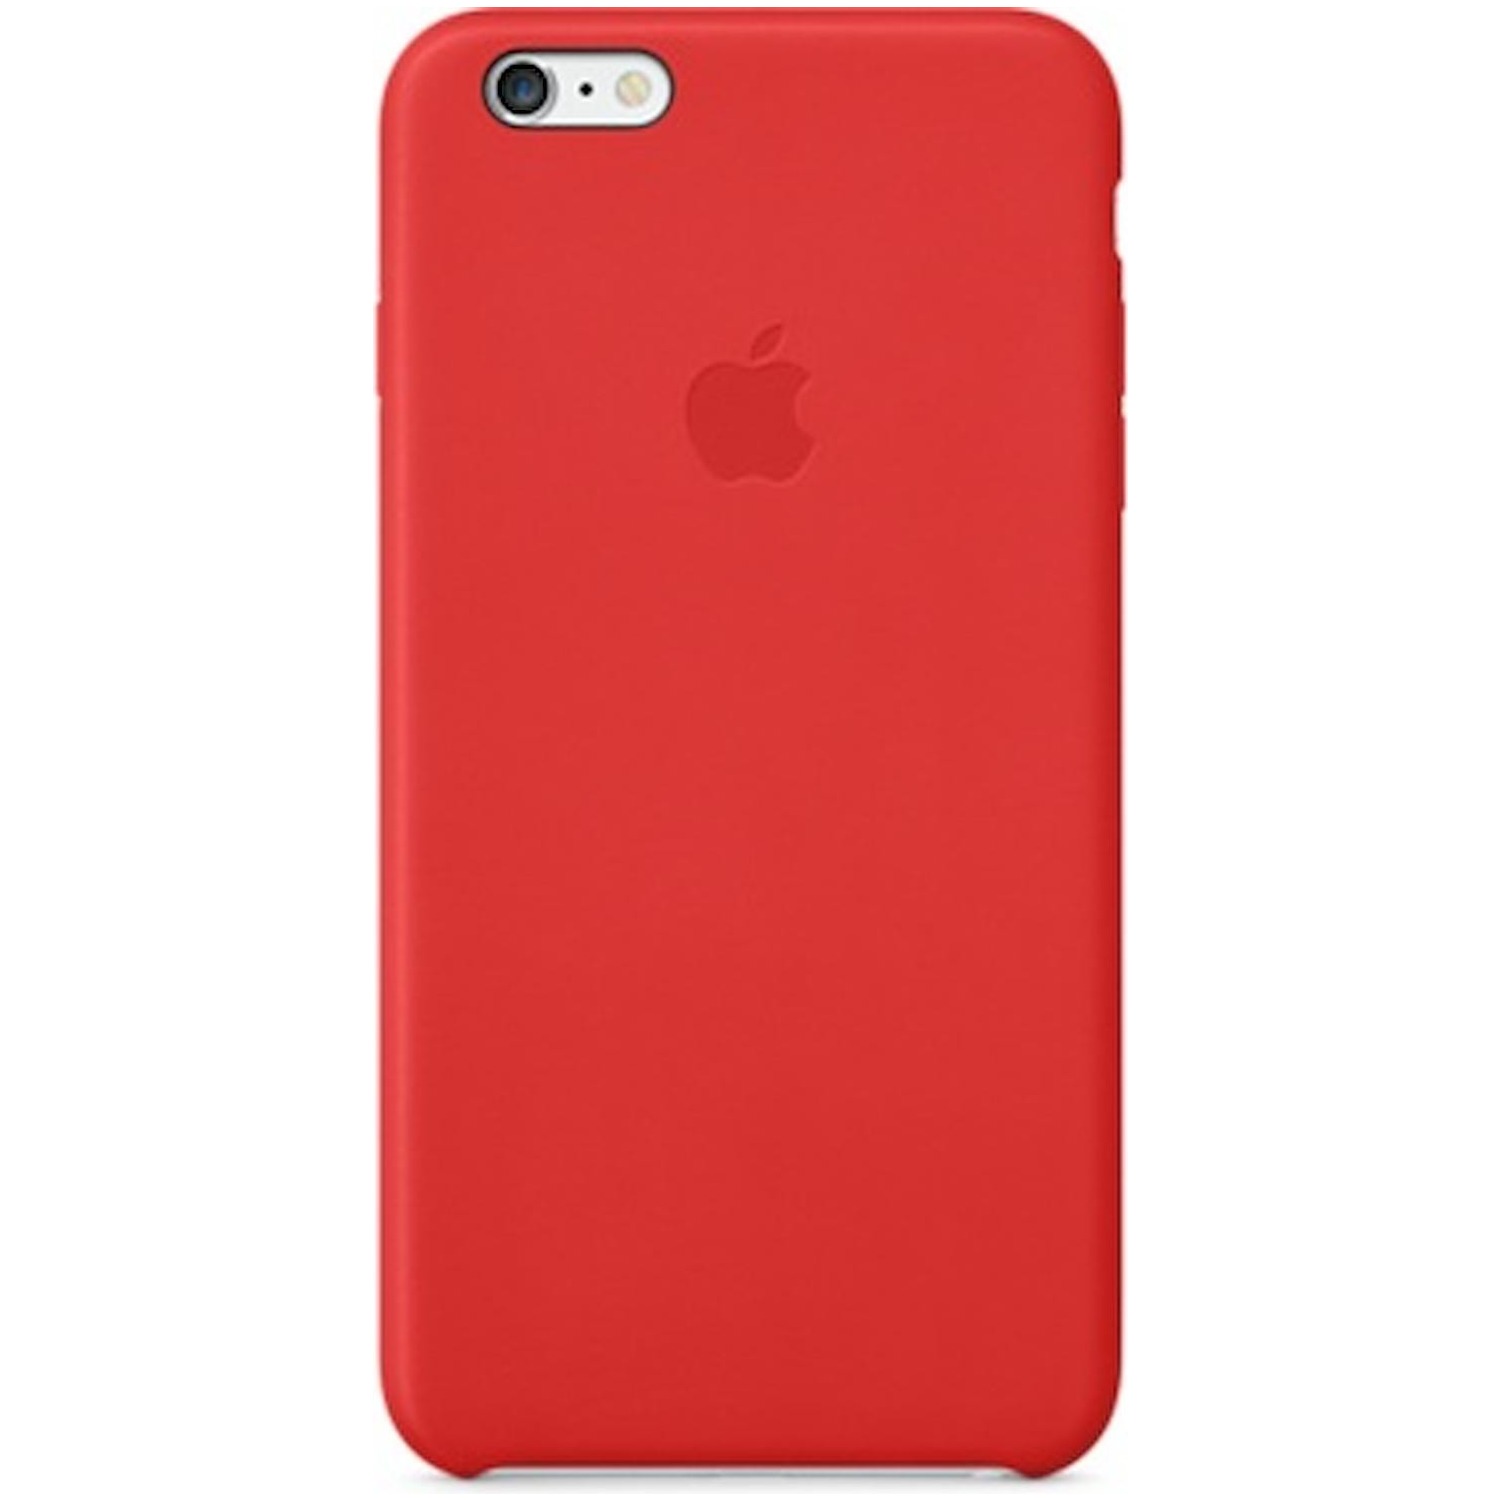 Immagine per Custodia in pelle Apple per iPhone 6 Plus rosso da DIMOStore